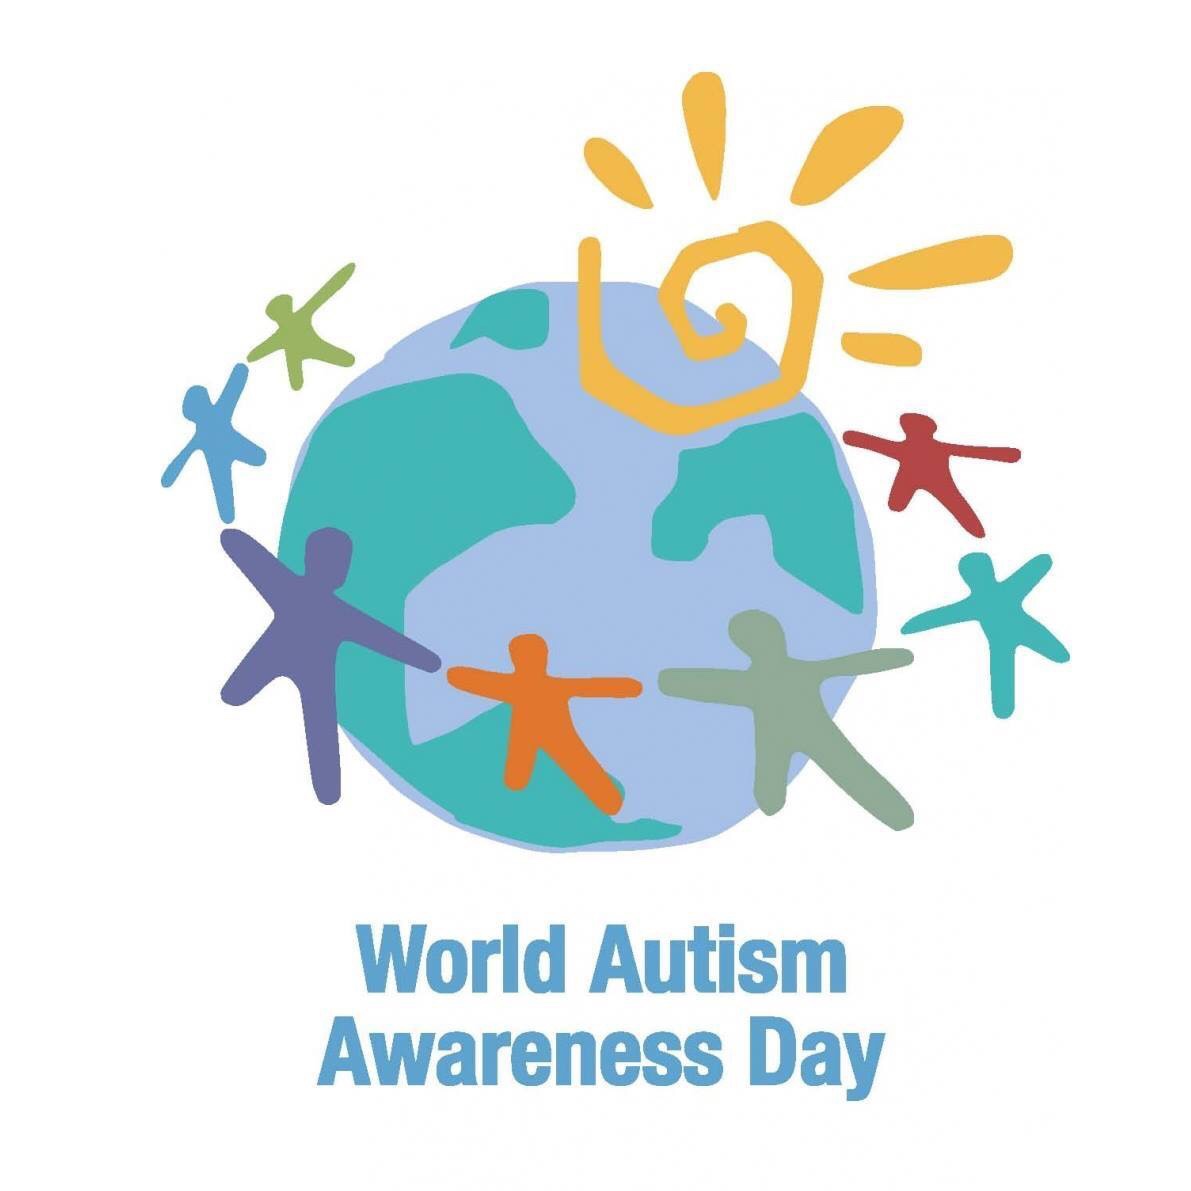 Autism Awareness Day Images Diller Odell April Is Autism Awareness